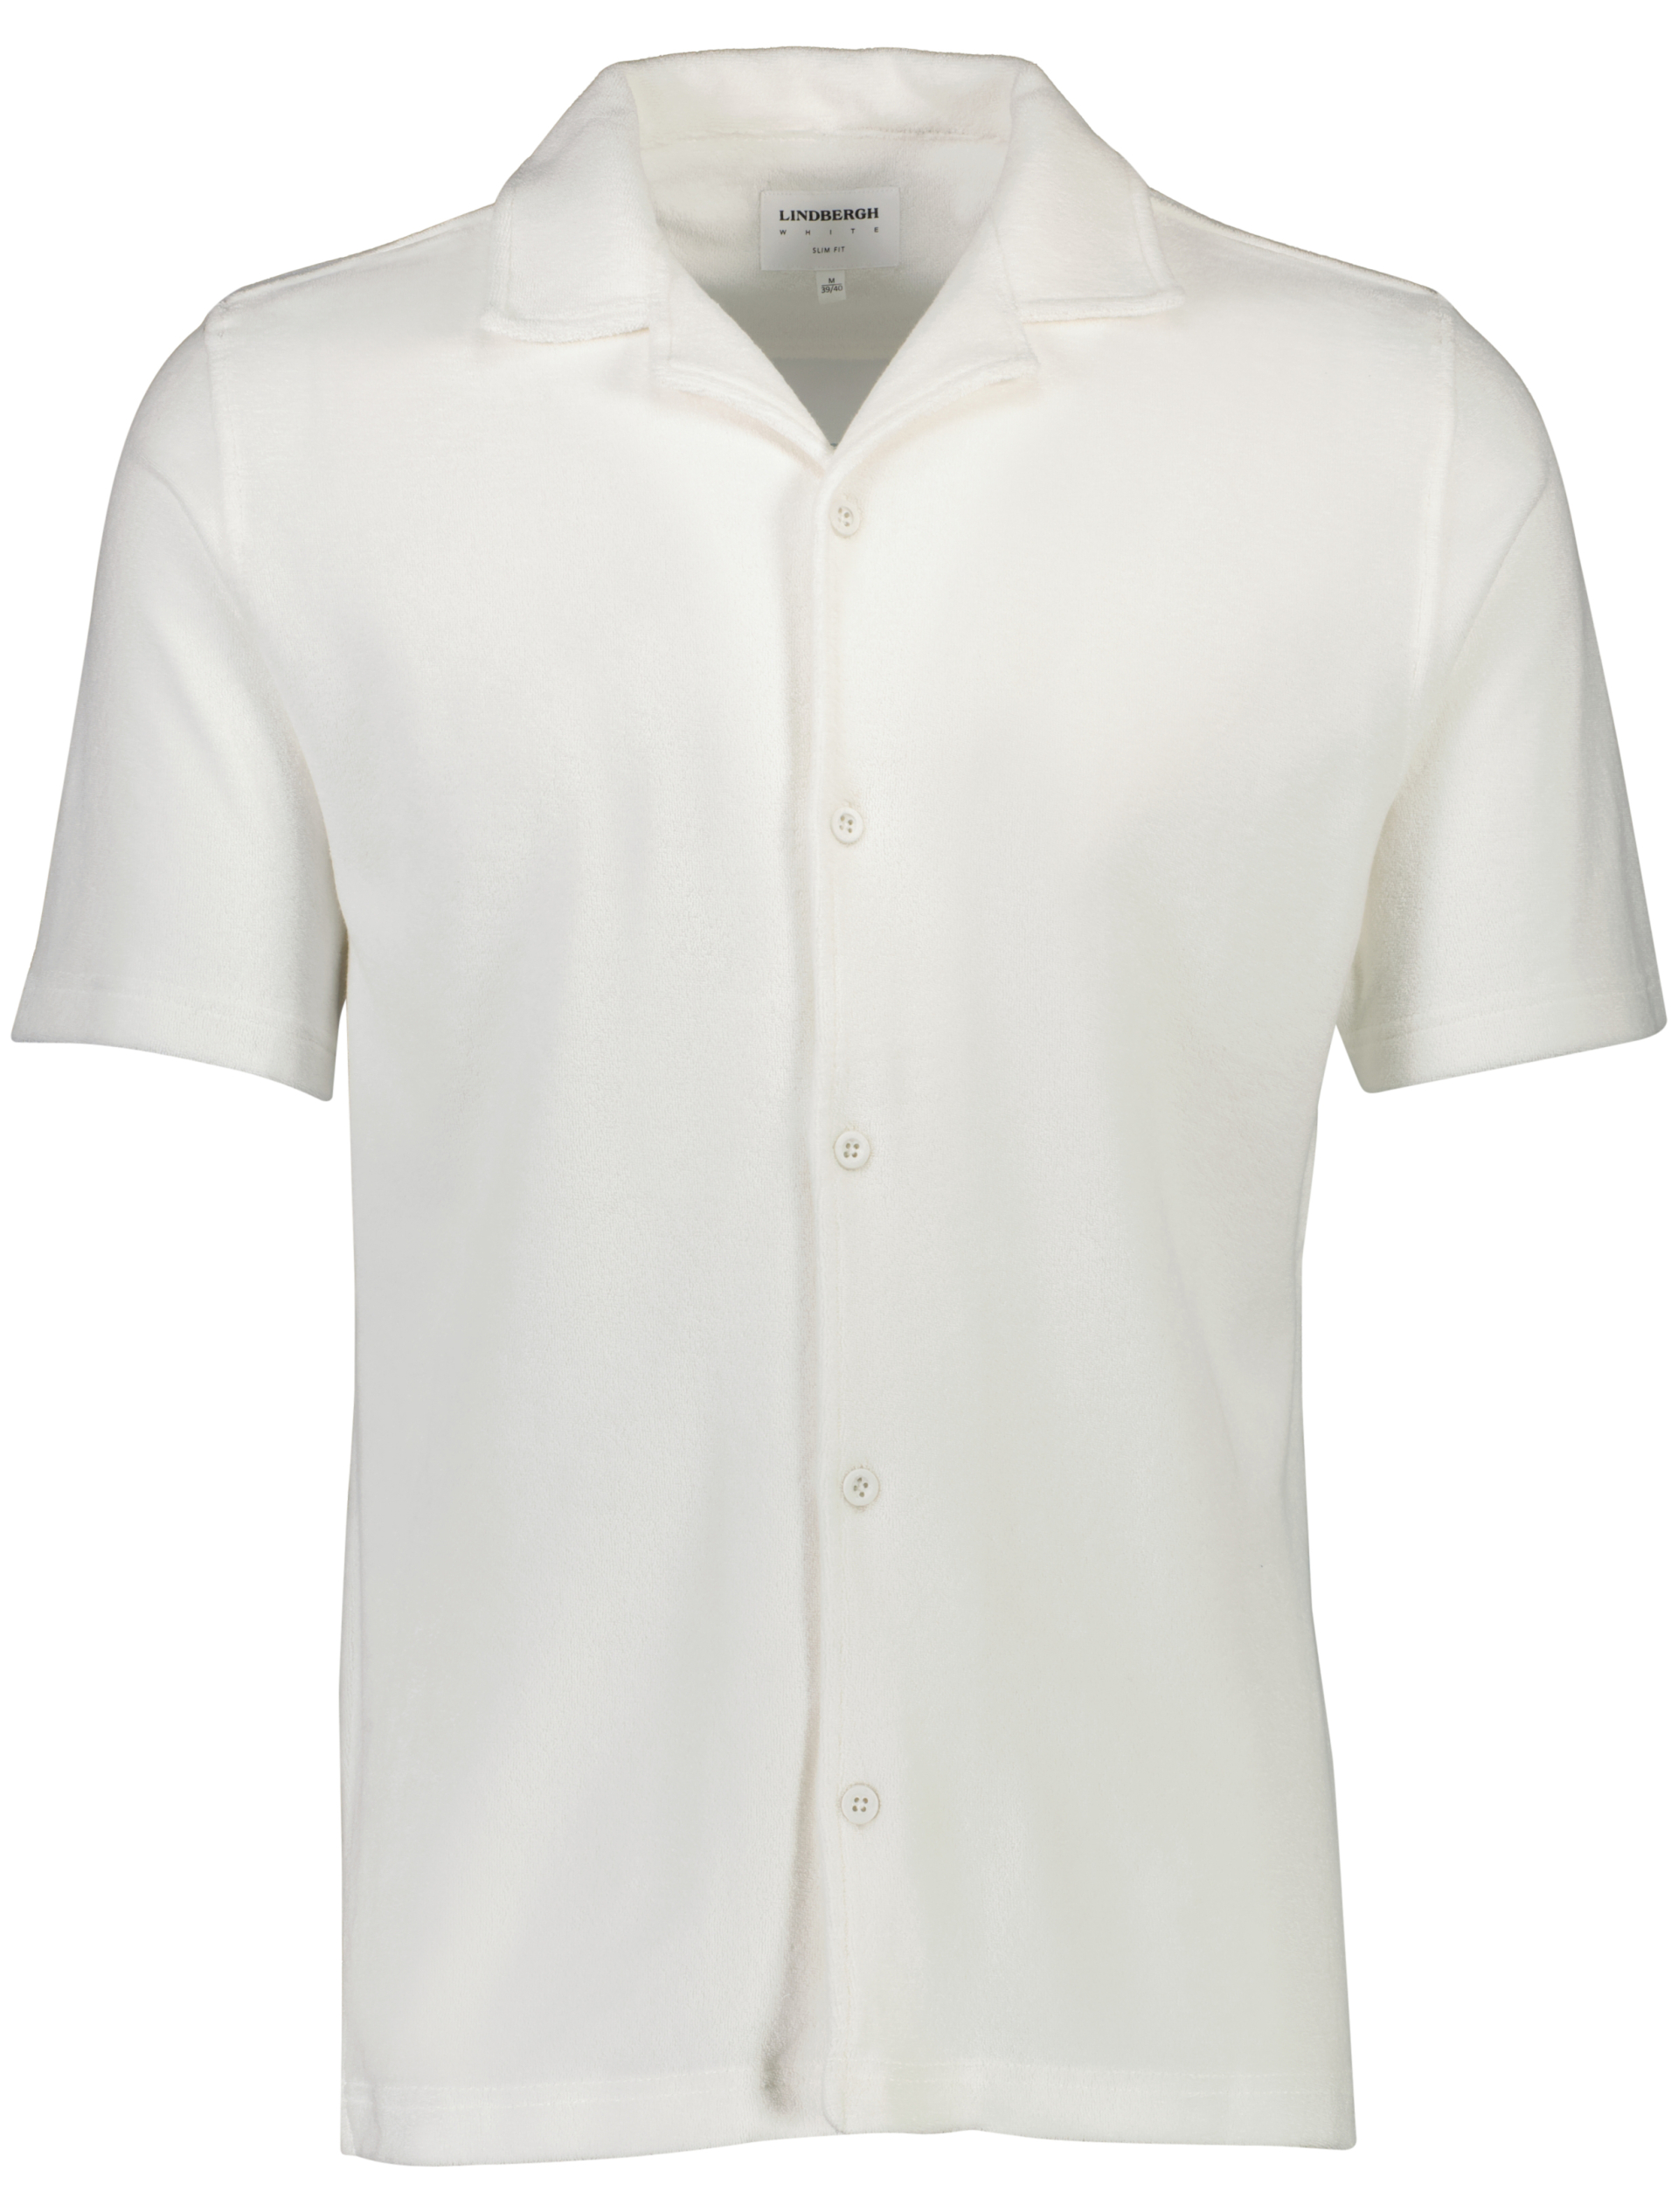 Lindbergh Casual shirt white / off white